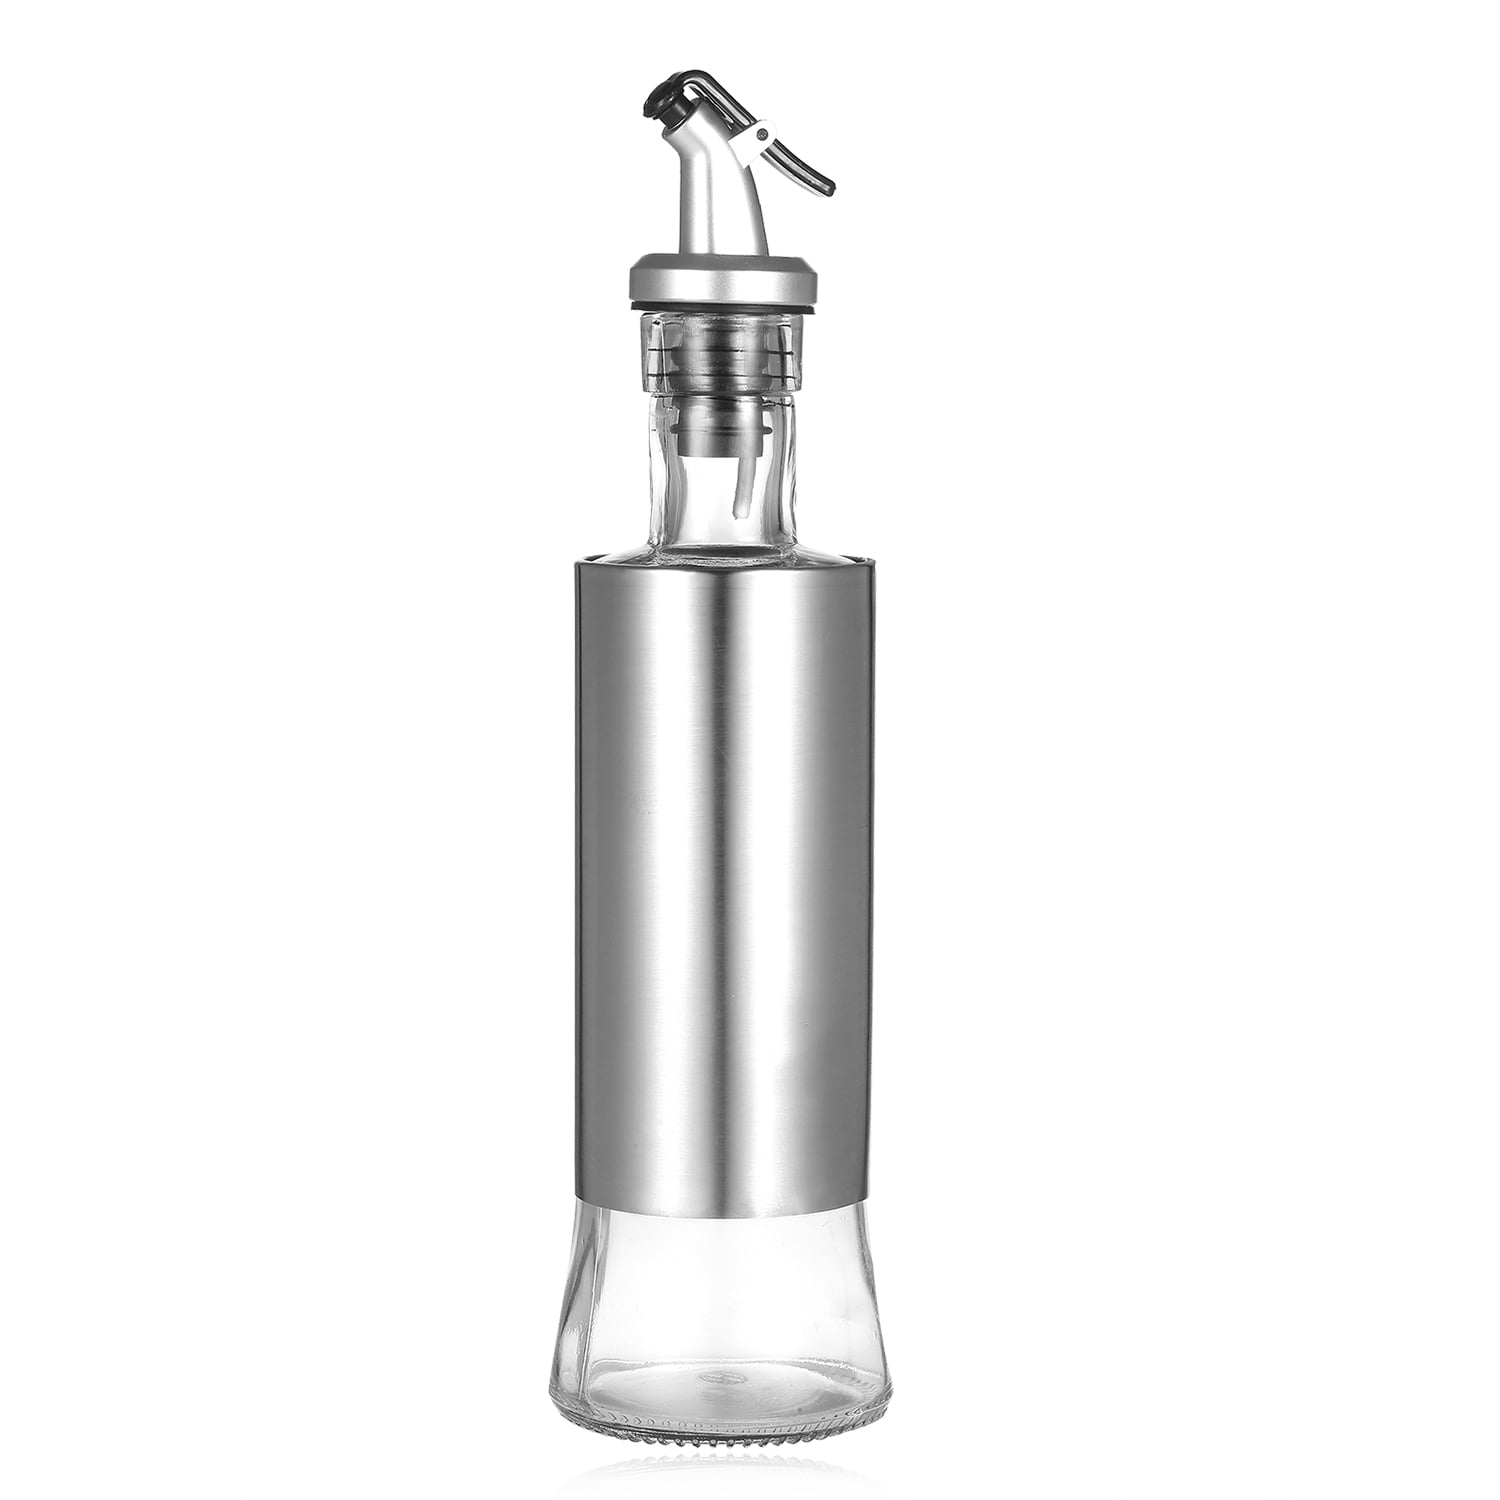 Stainless Steel Olive Oil Vinegar Dispenser Pourer Bottle Kitchen Cooking Tool 